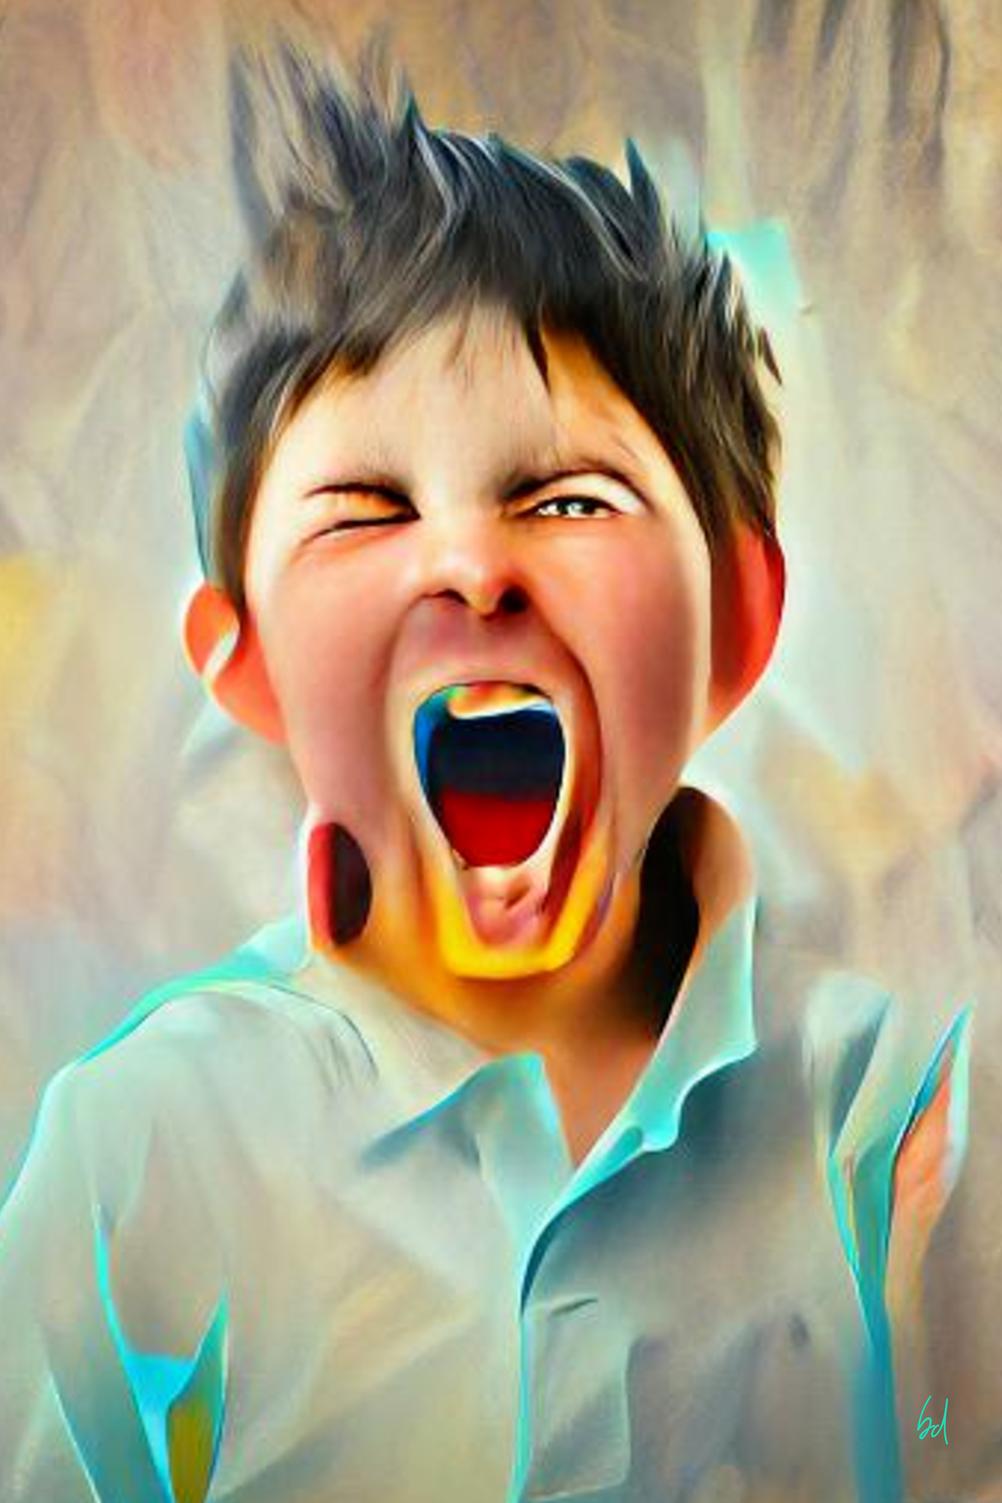 Emotions - Anger 40x60 cm